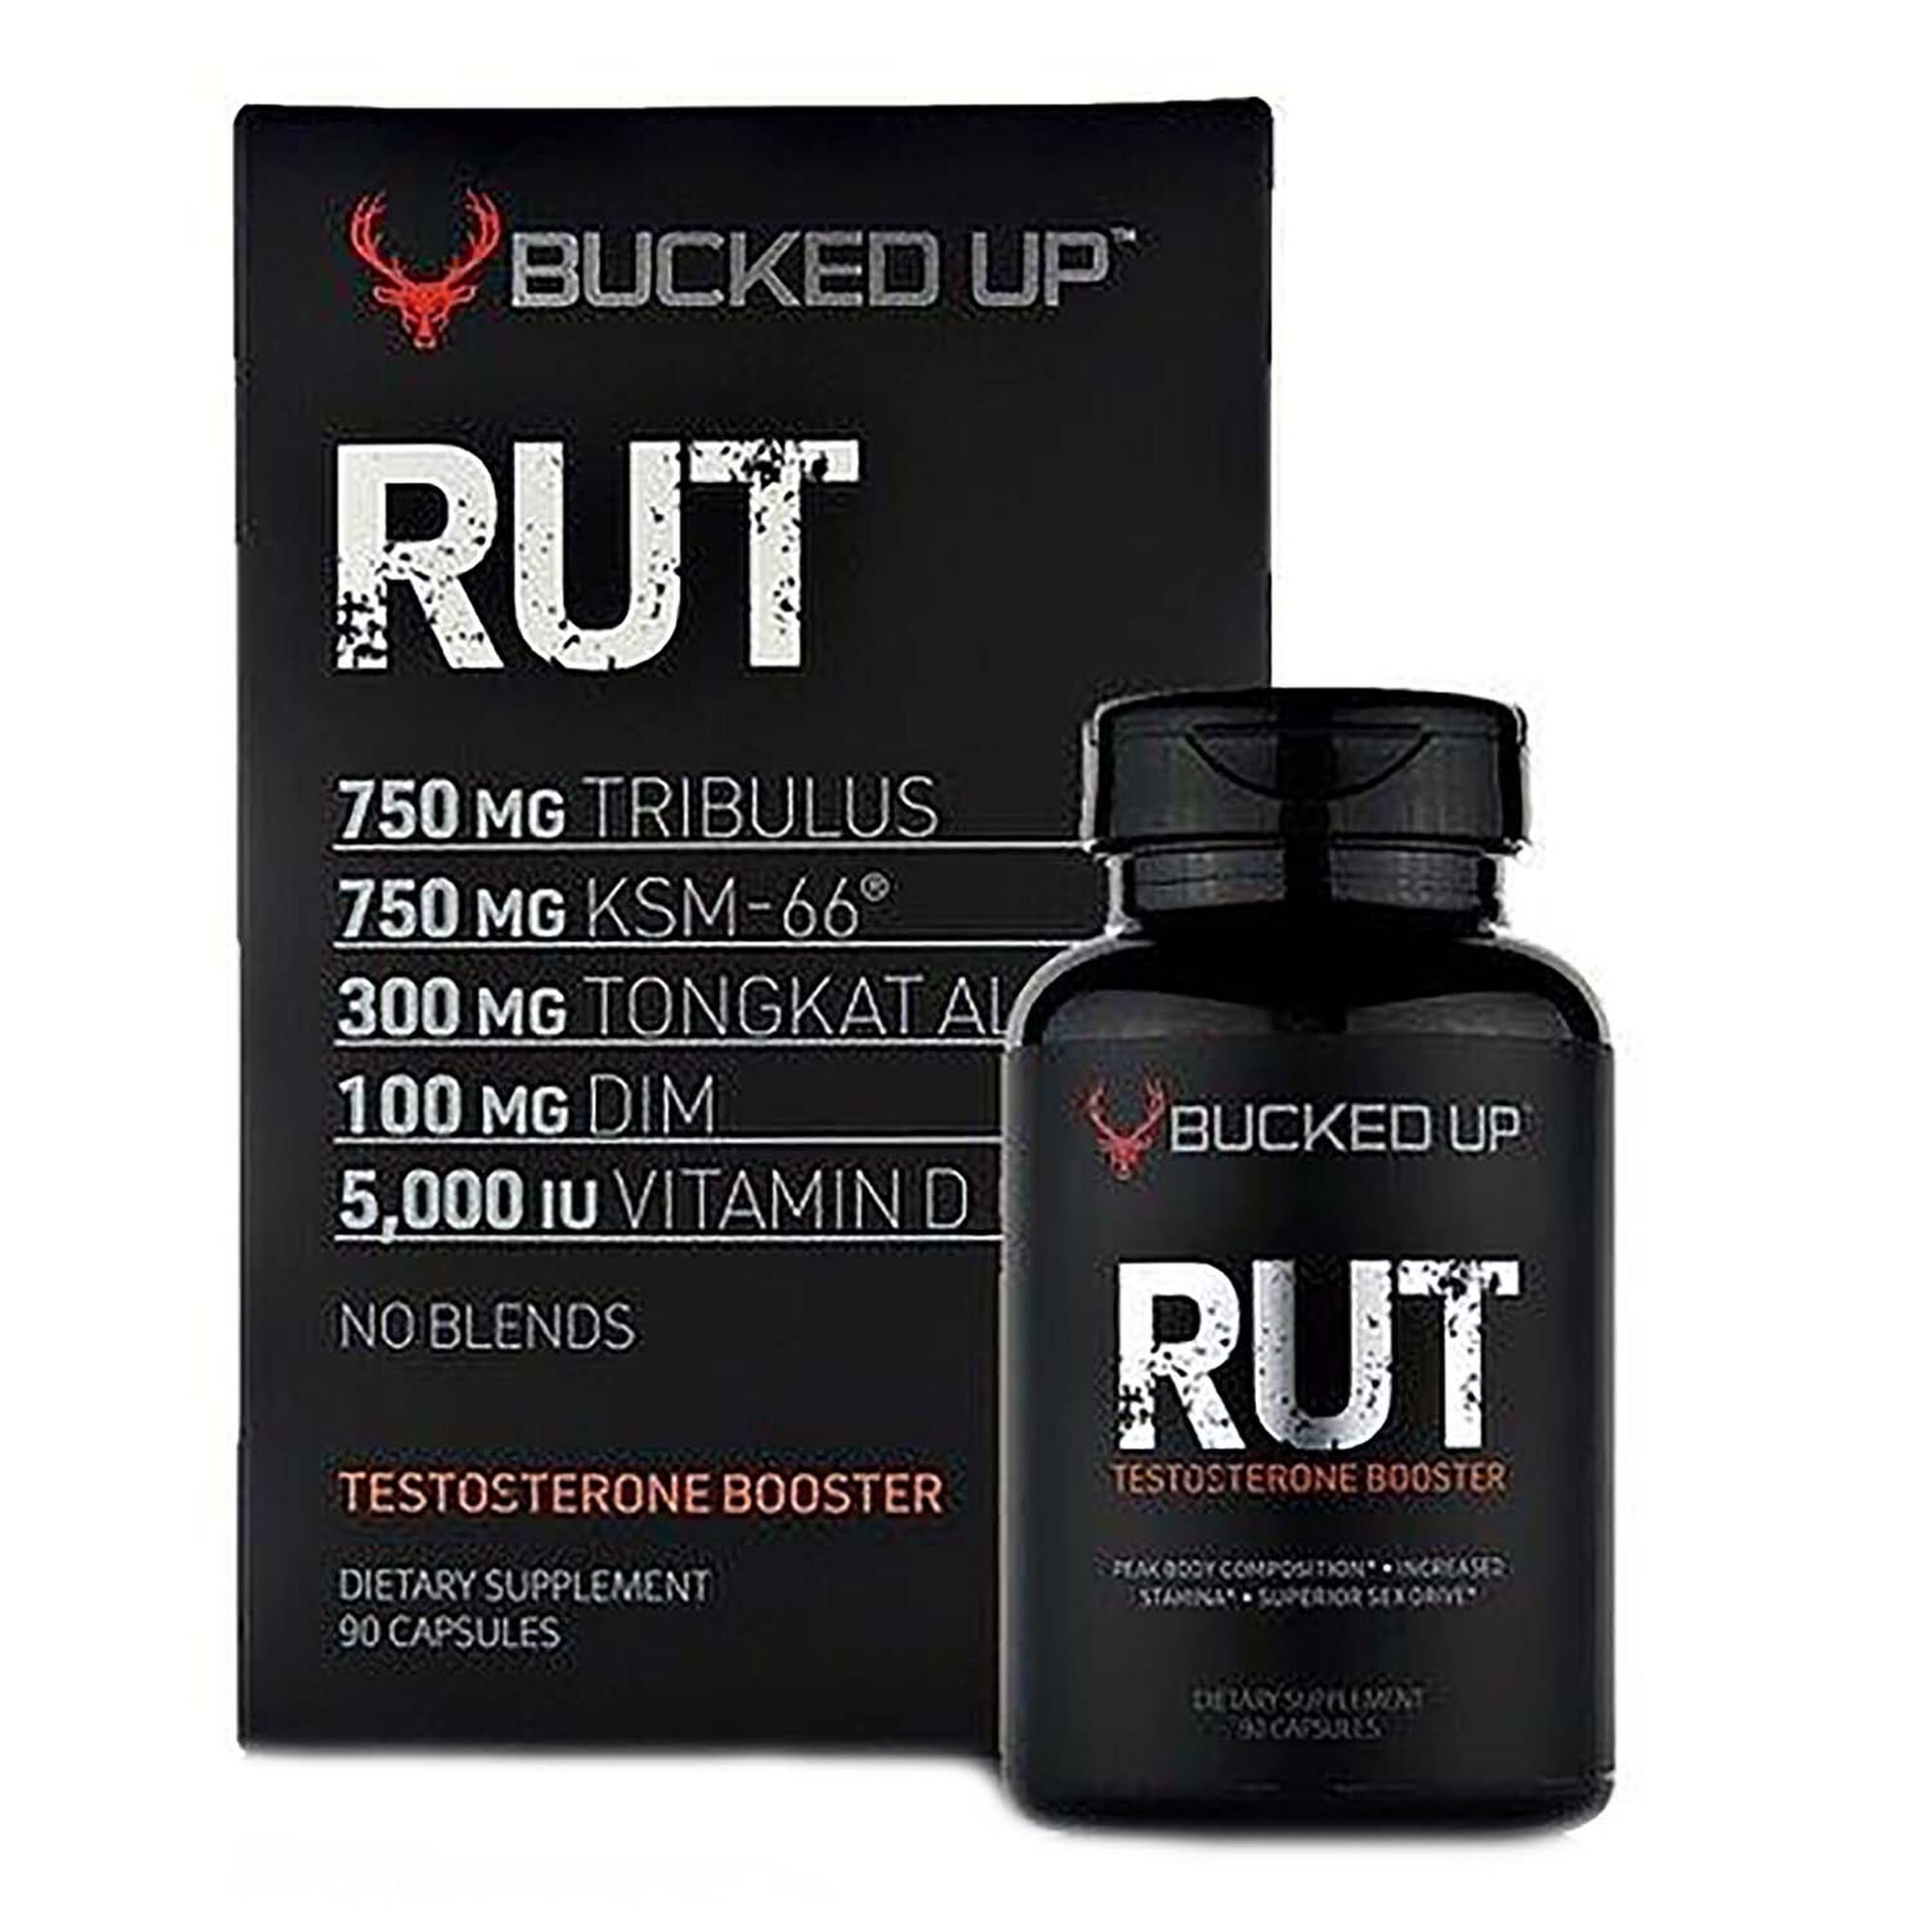 Rut Testosterone Booster Side Effects